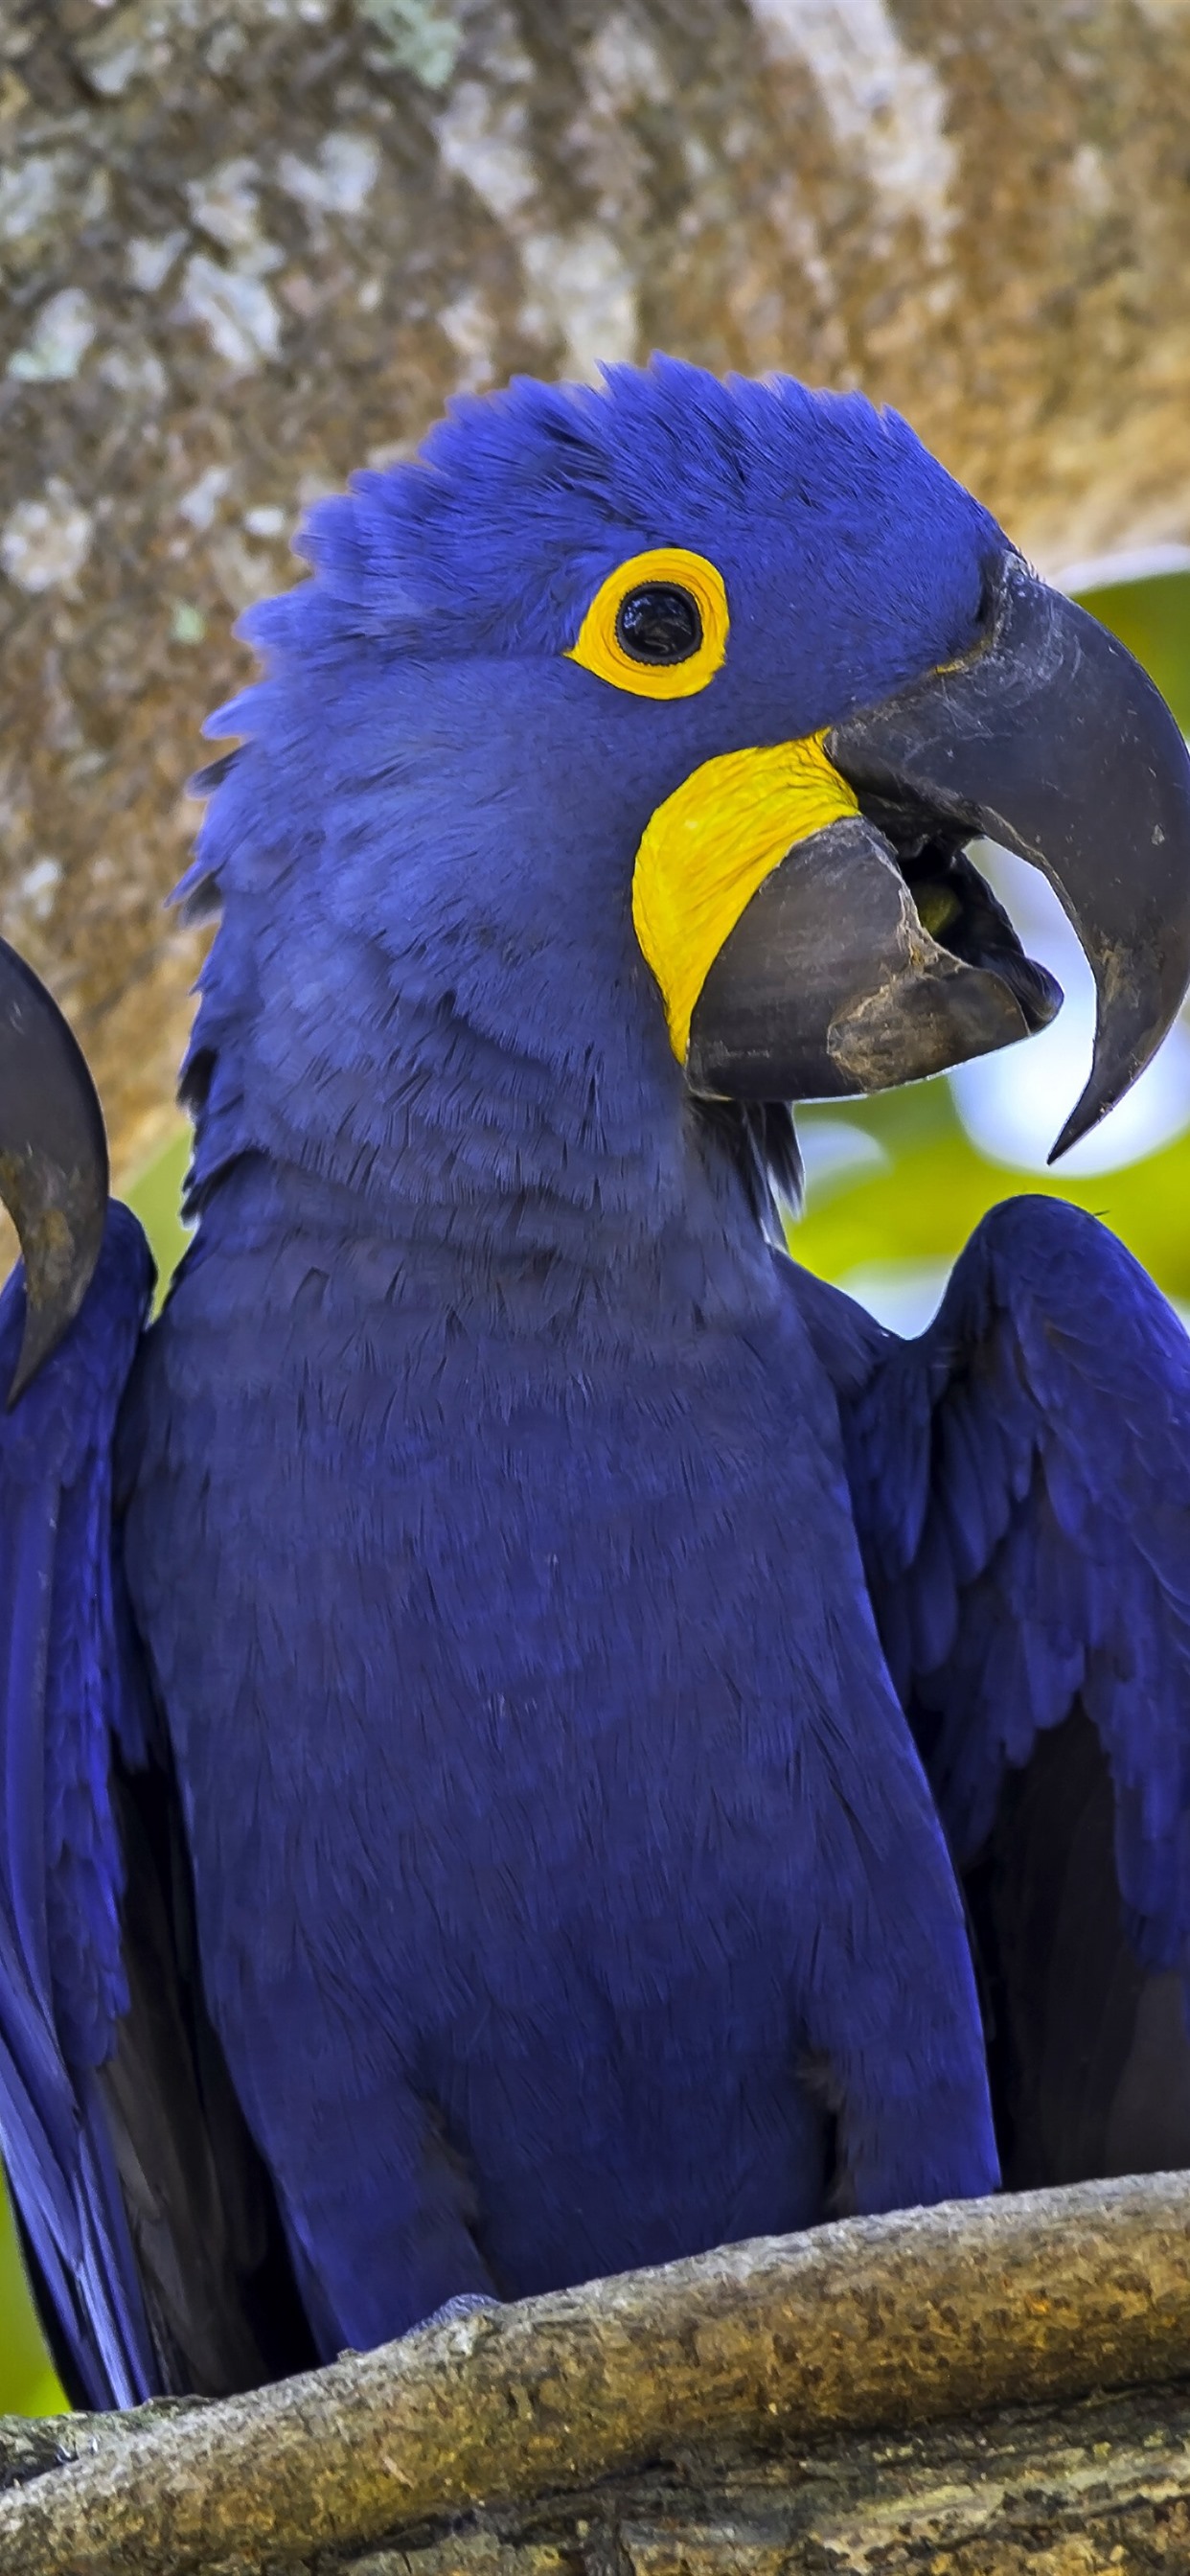 Iphone Wallpaper Two Blue Parrots, Macaw - 鸚鵡 一 對 - 1242x2688 Wallpaper -  